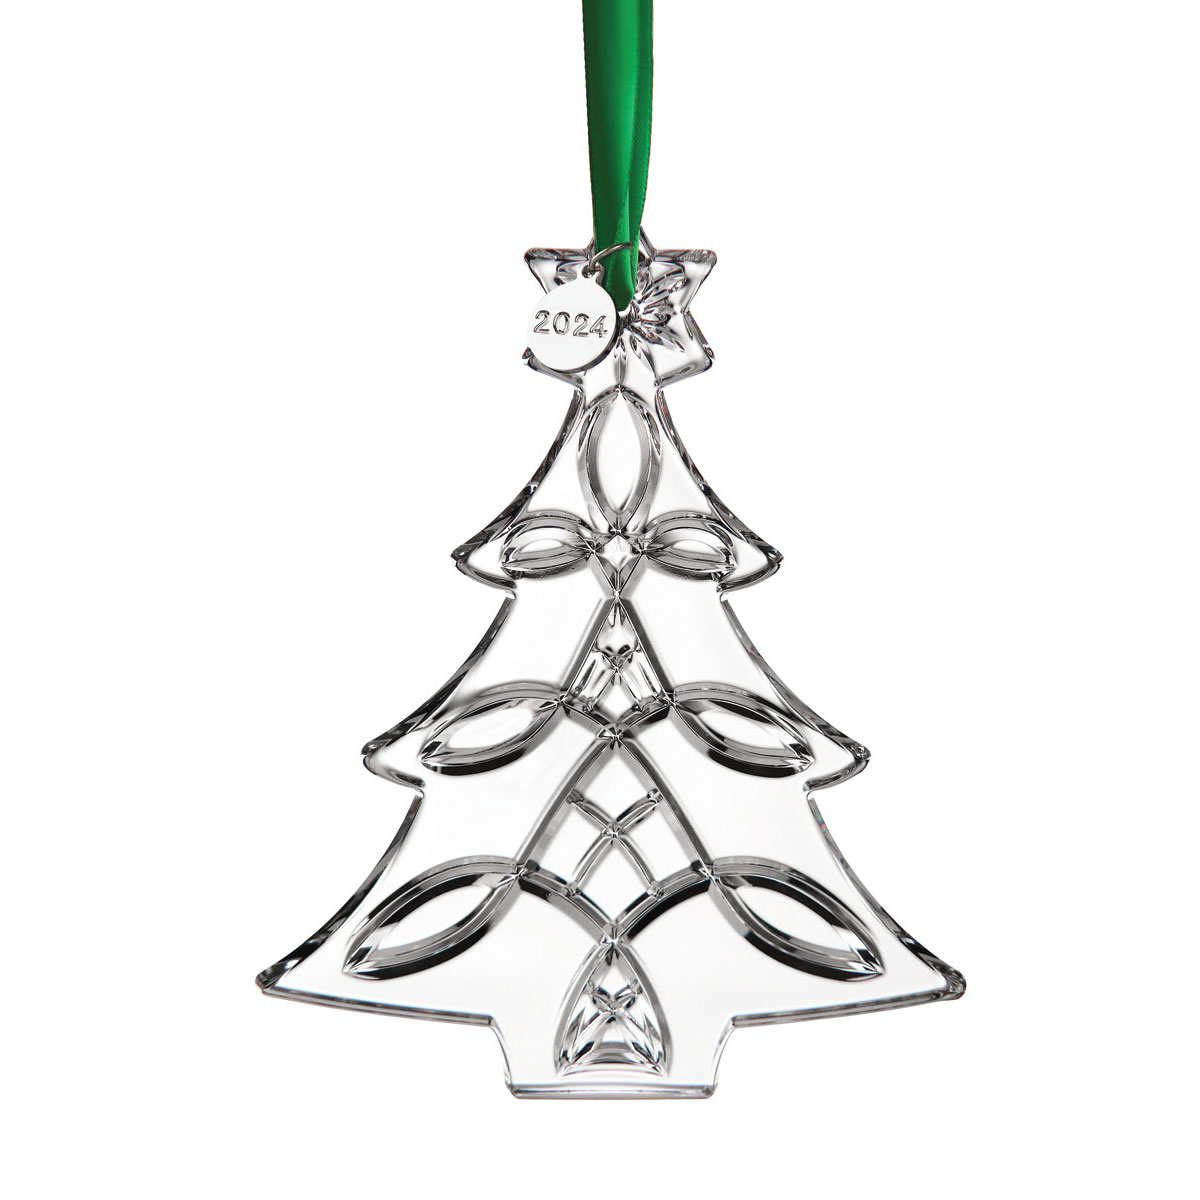 Cashs Ireland, 2022 Celtic Christmas Tree Ornament